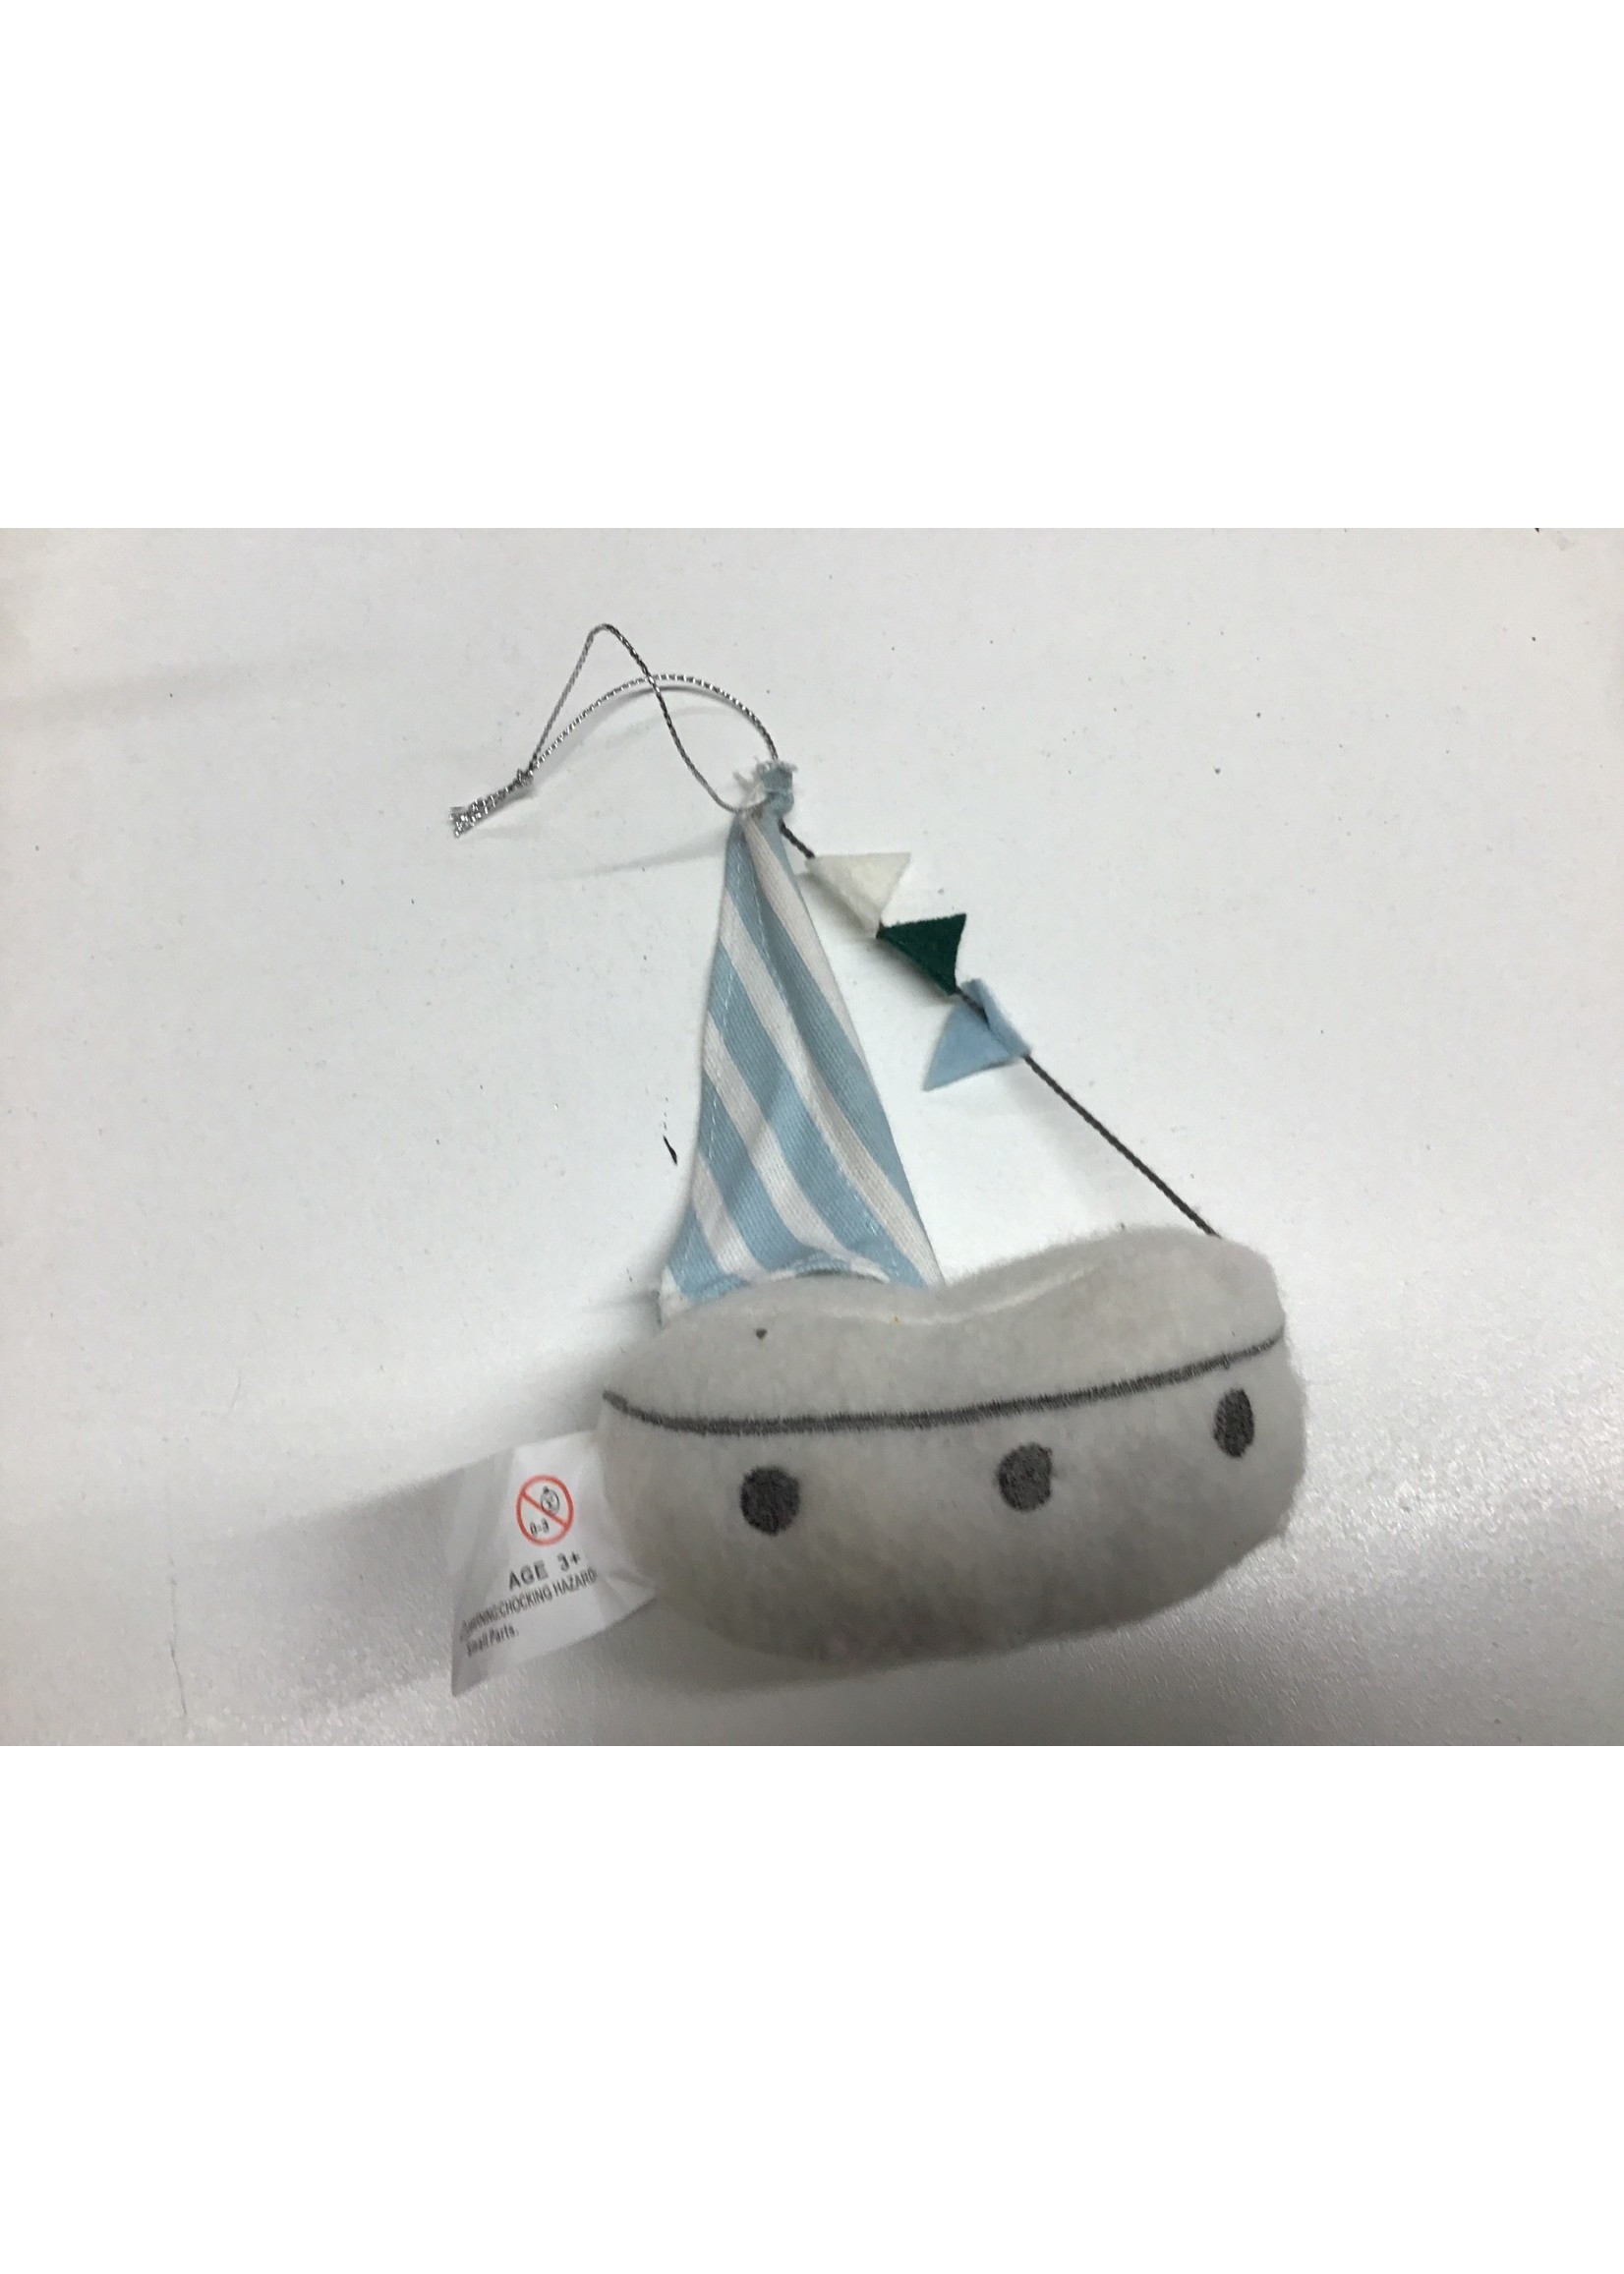 Christmas sail boat ornament